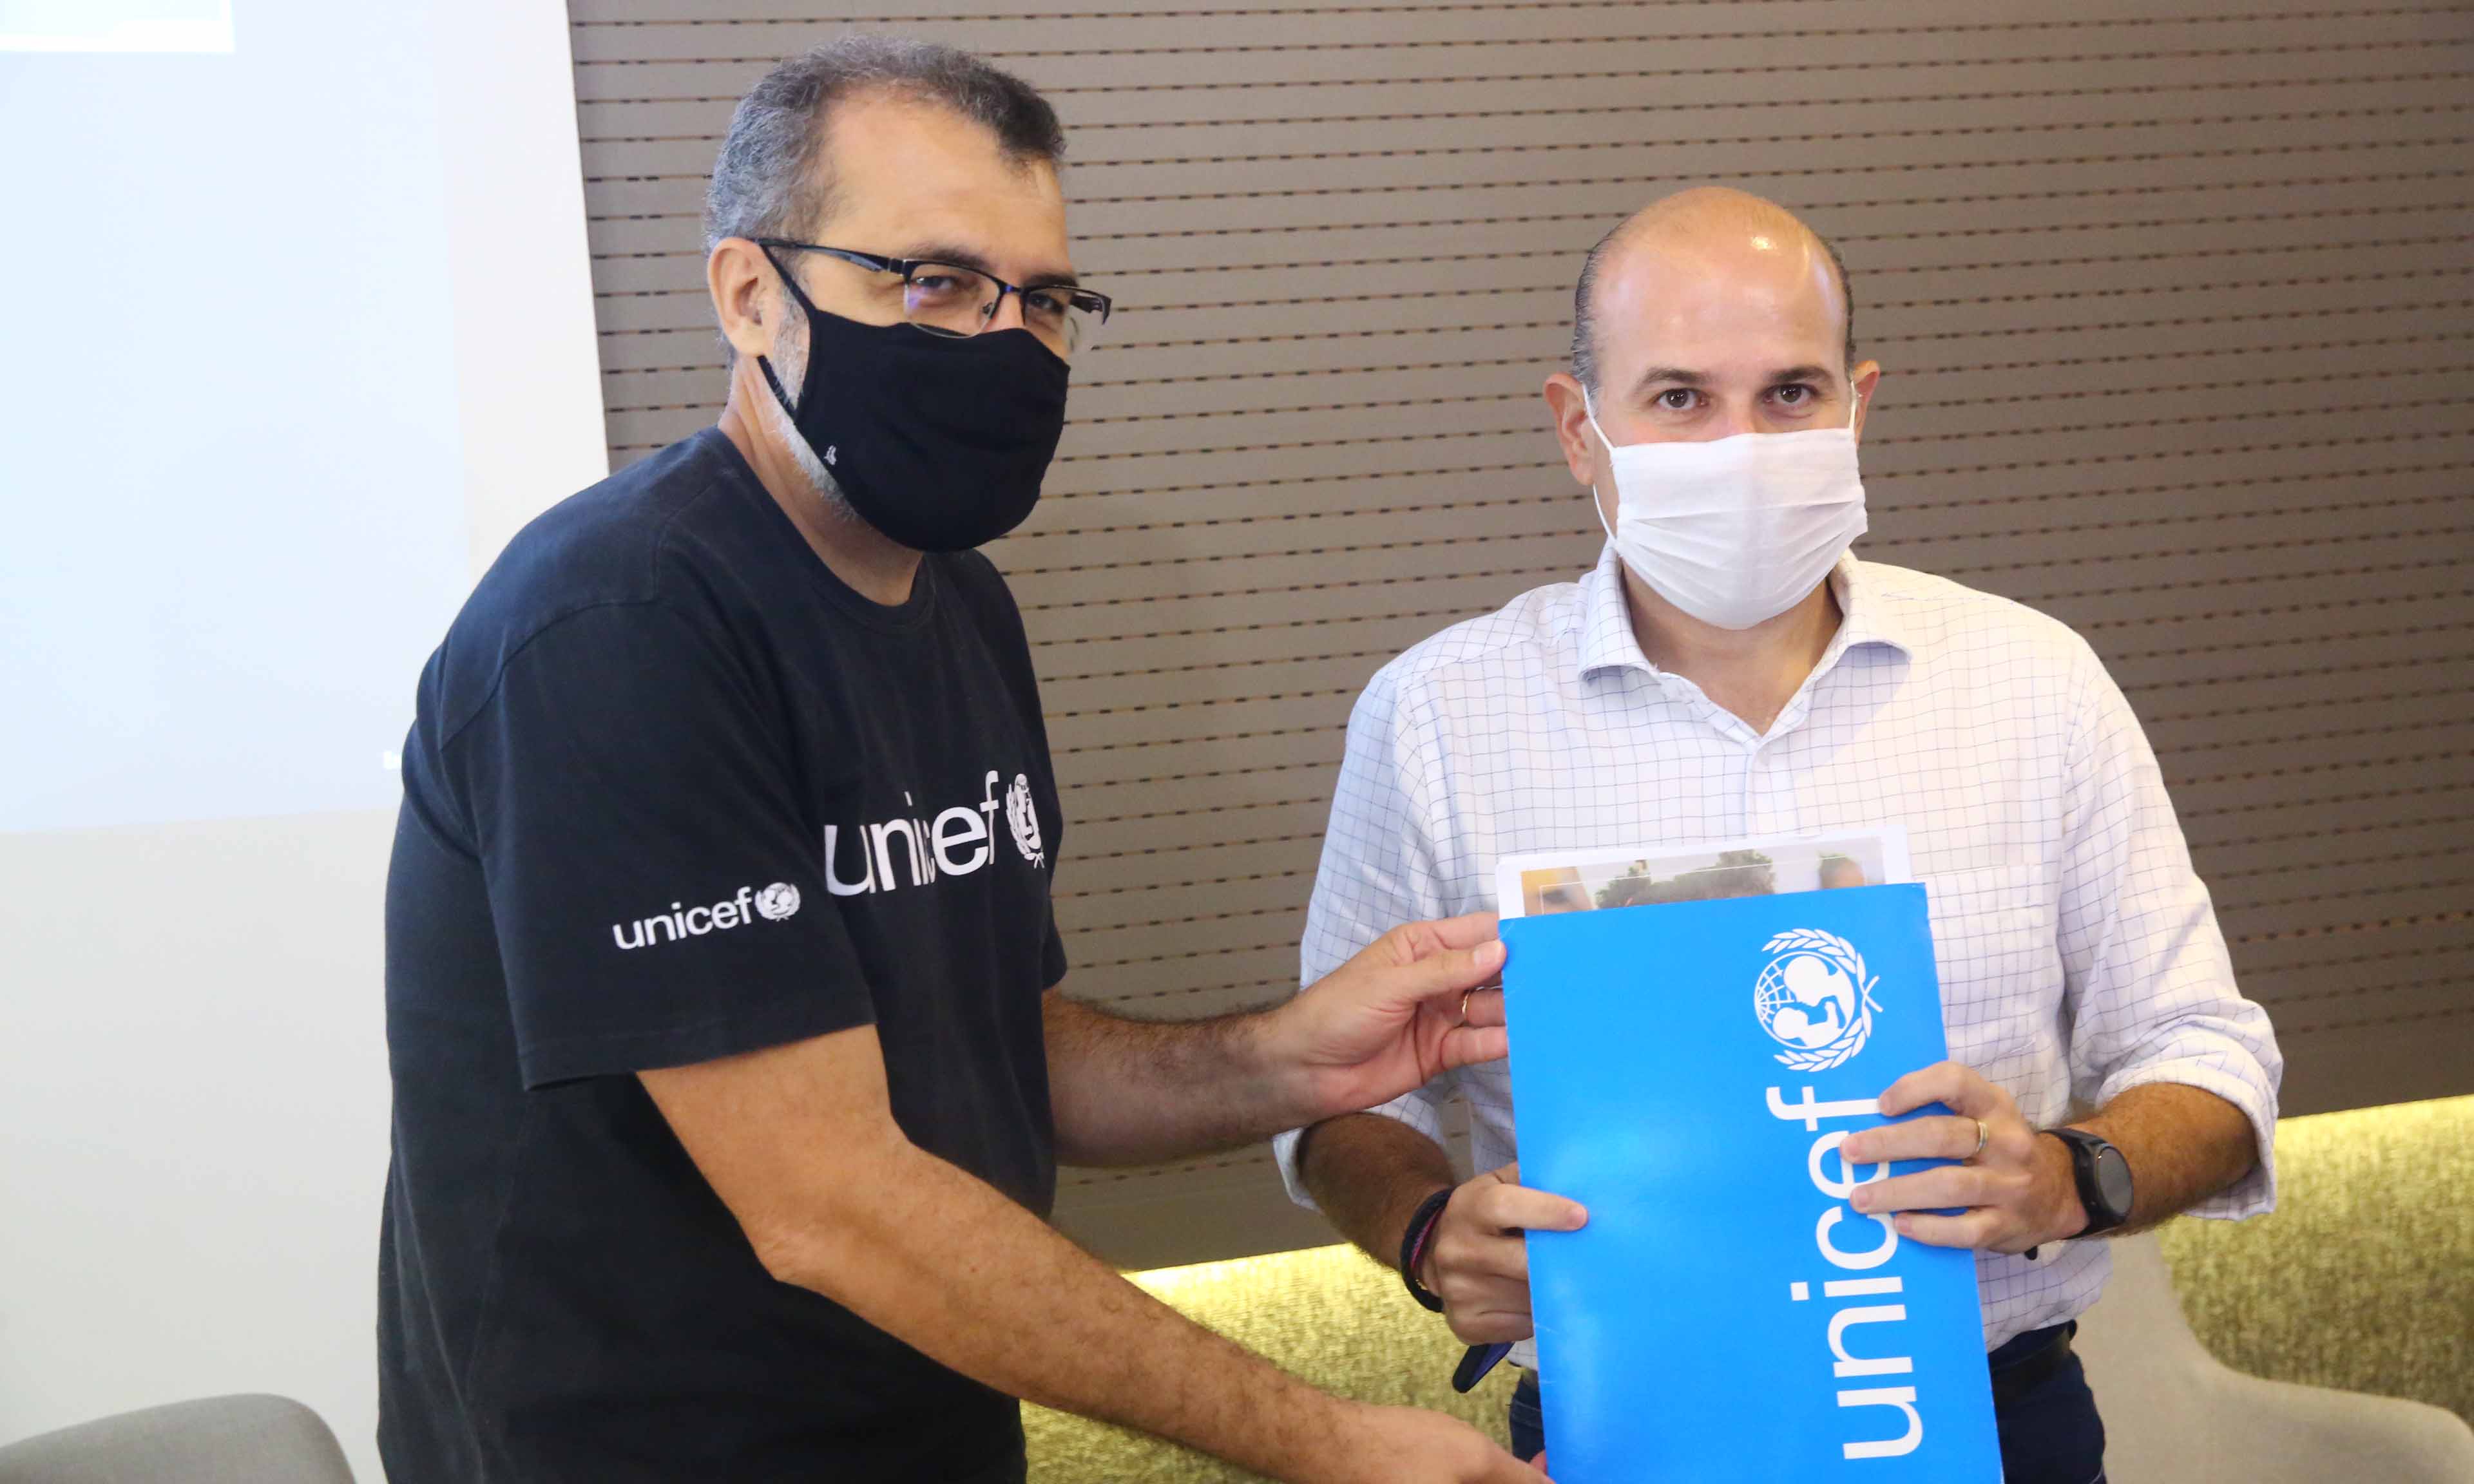 Rui Aguiar e prefeito, ambos de máscara posando para a foto. Prefeitura segura pasta com marca da Unicef